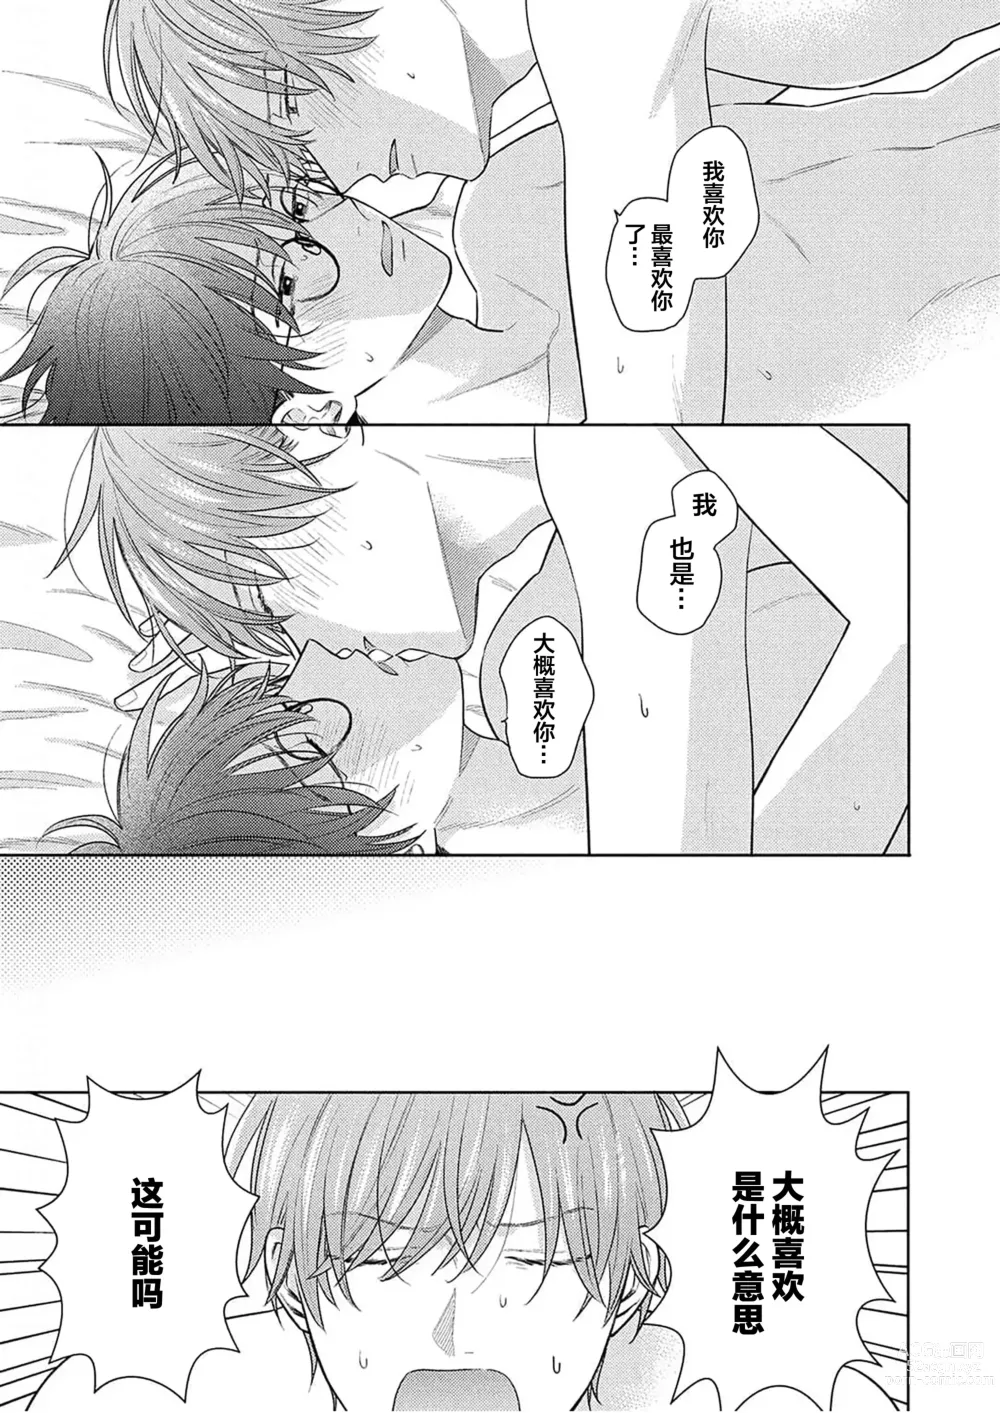 Page 185 of manga 这真的是恋爱吗?